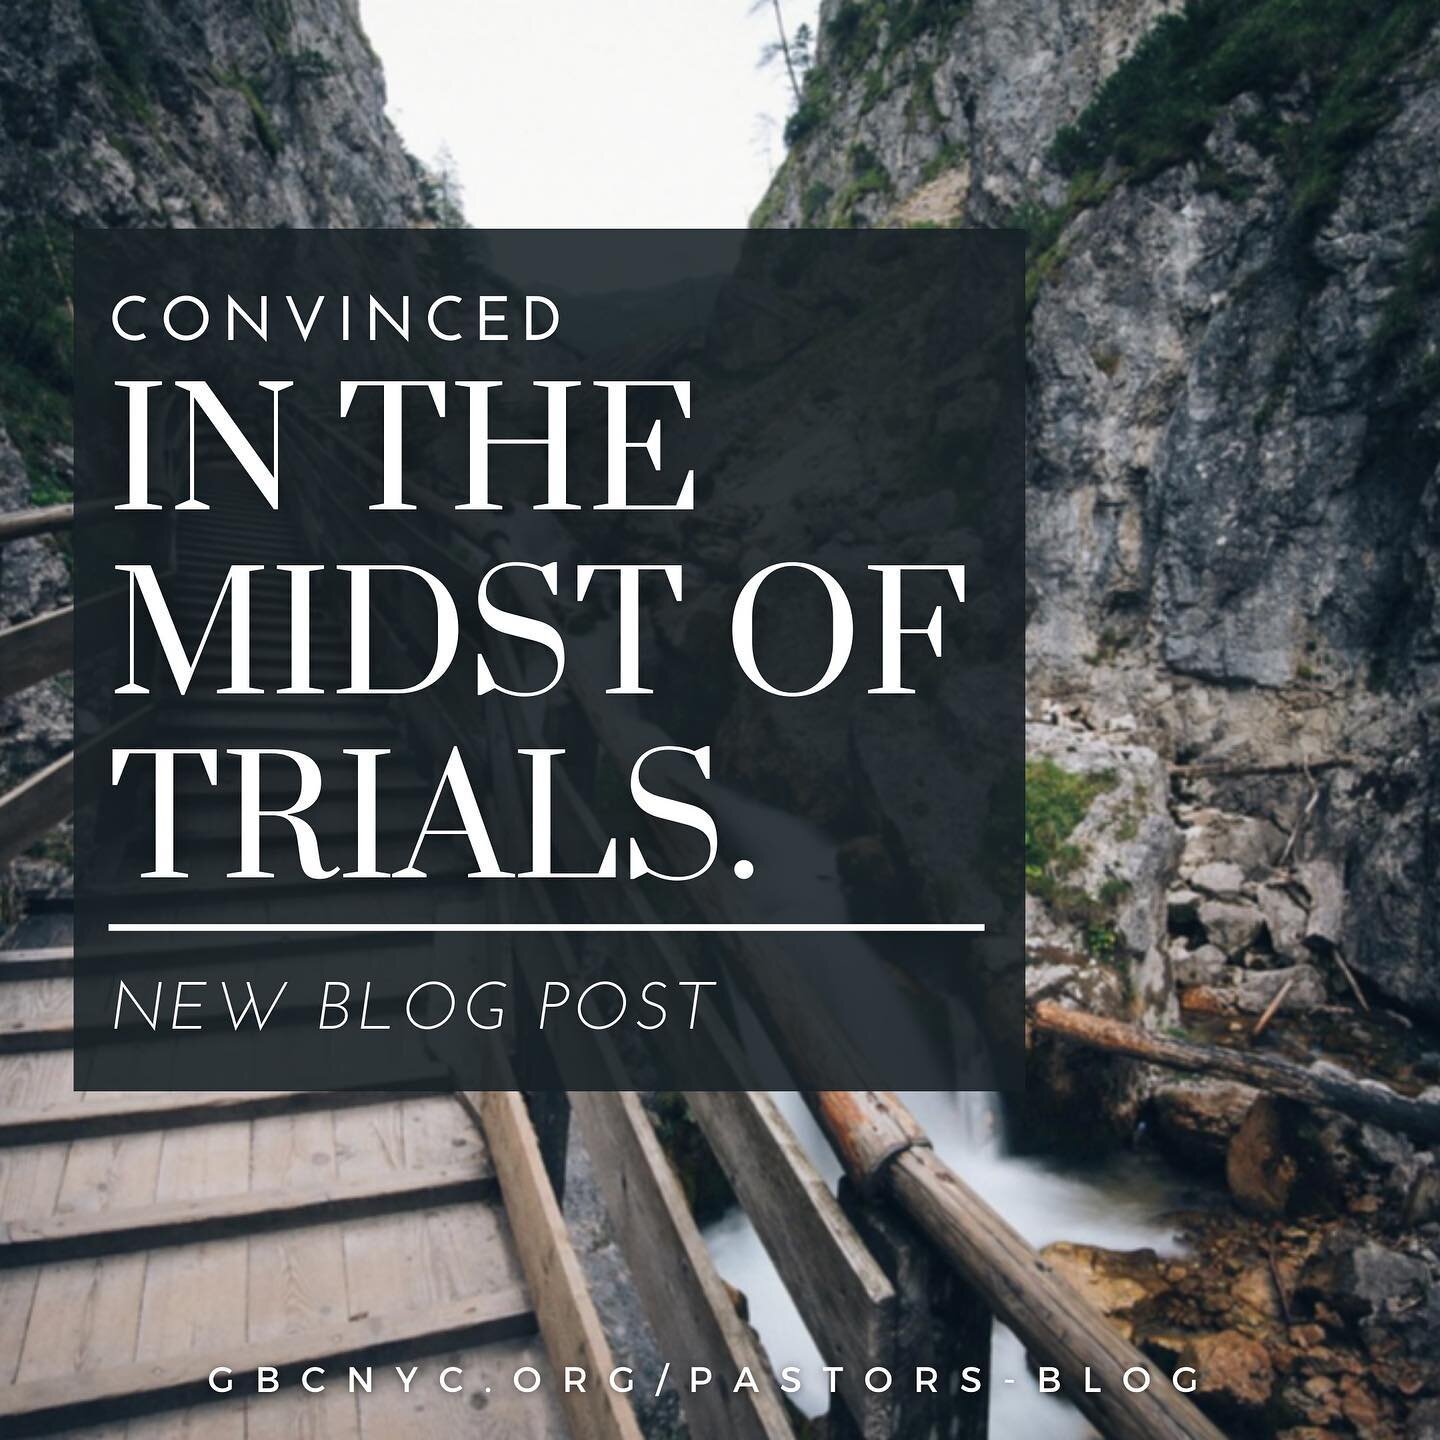 &ldquo;Convinced in the Midst of Trials&rdquo;
Gbcnyc.org/pastors-blog